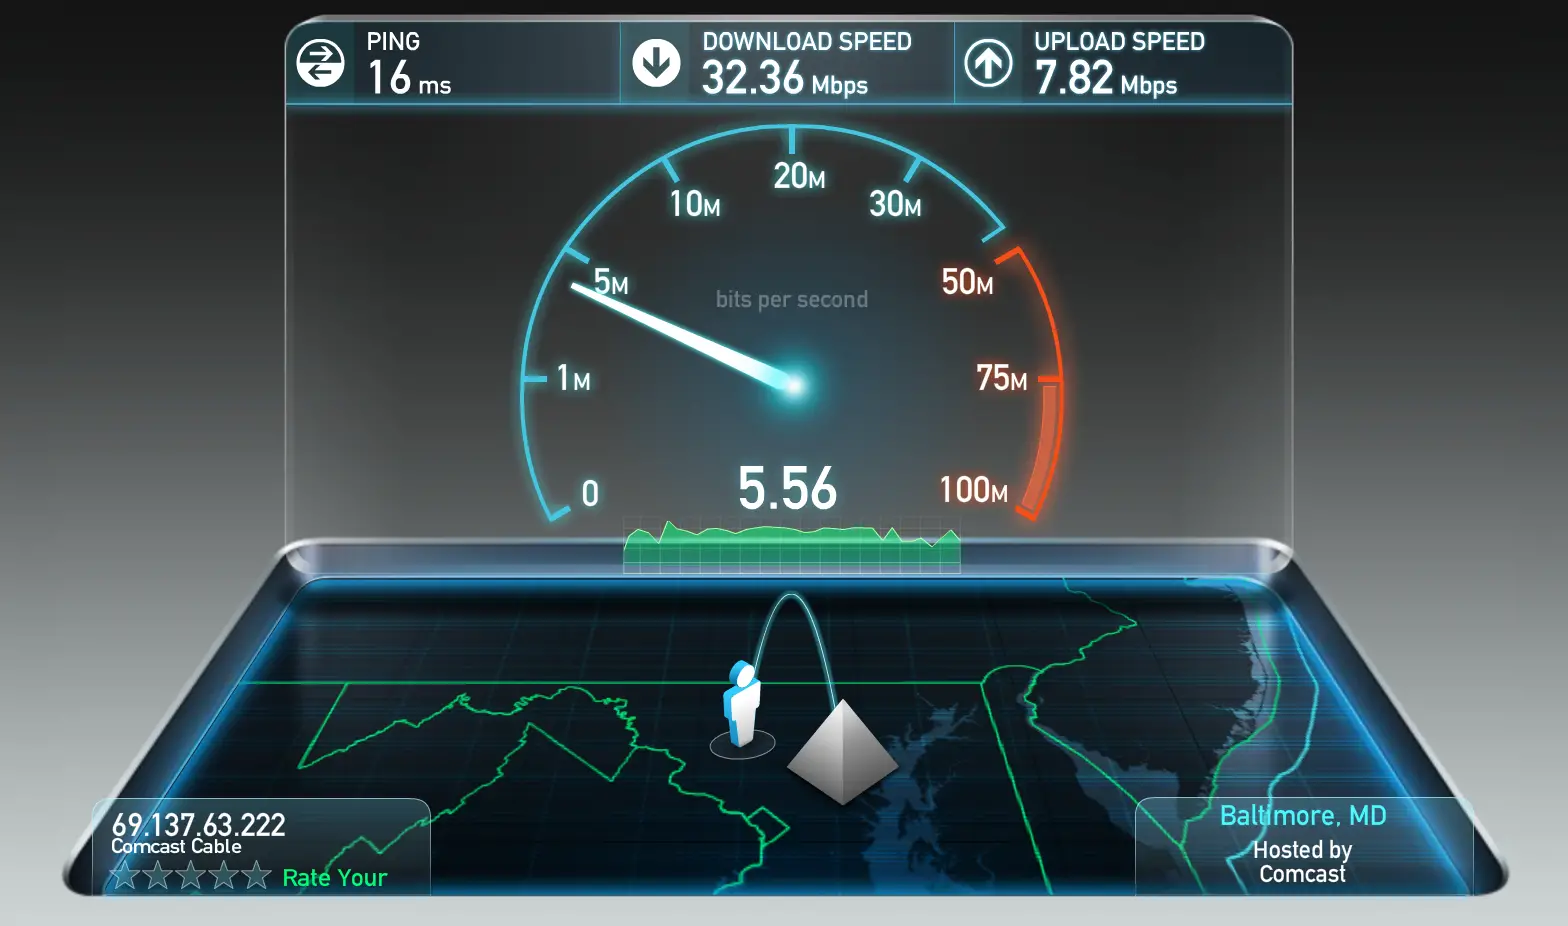 check my internet speed